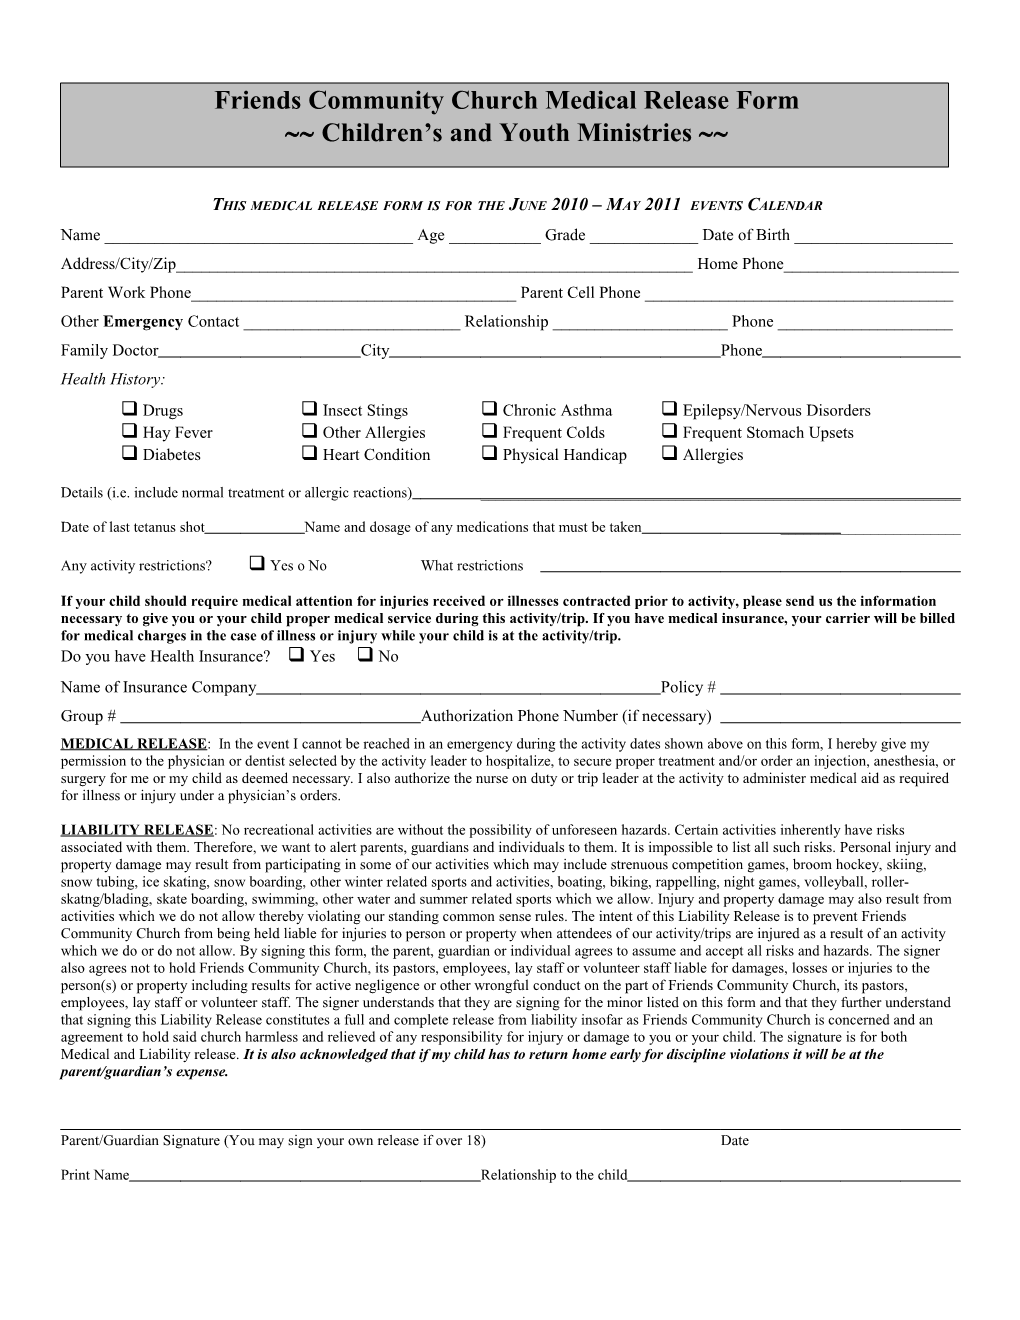 Friends Community Church Medical Release Form